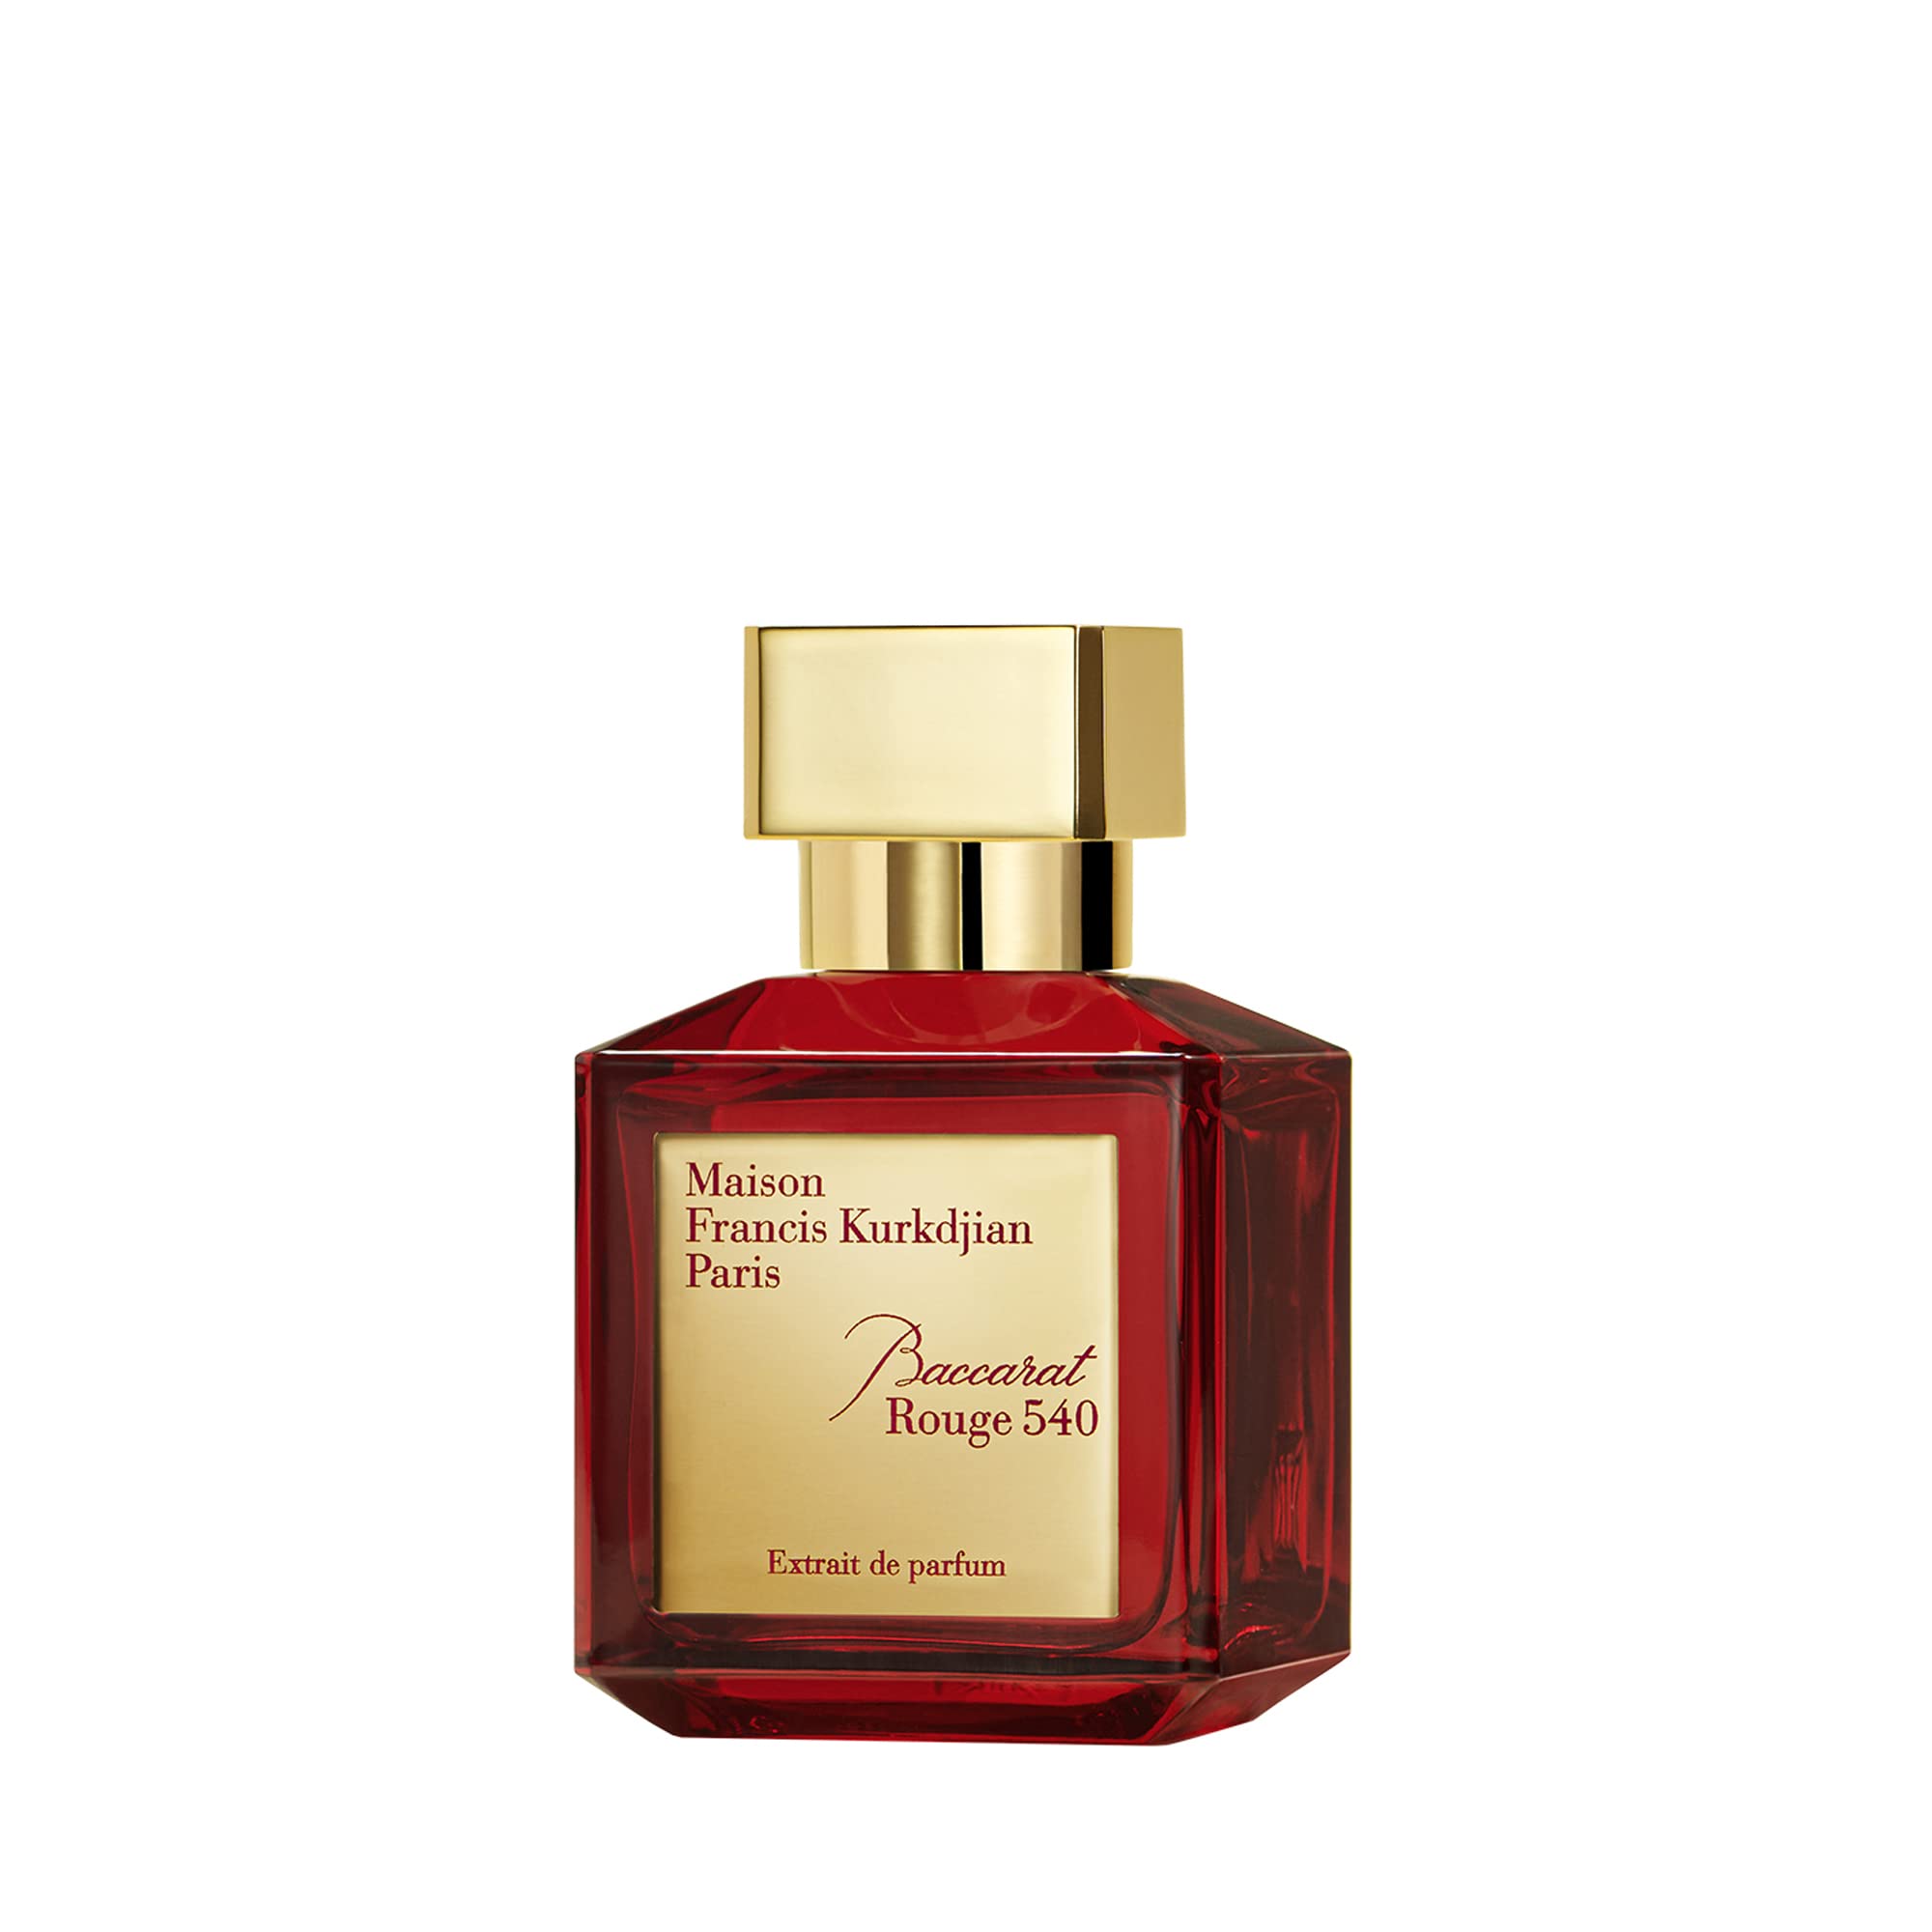 Maison Francis Kurkdjian Baccarat Rouge 540 Pure Perfume, 2.3 Fl Oz (Pack of 1)